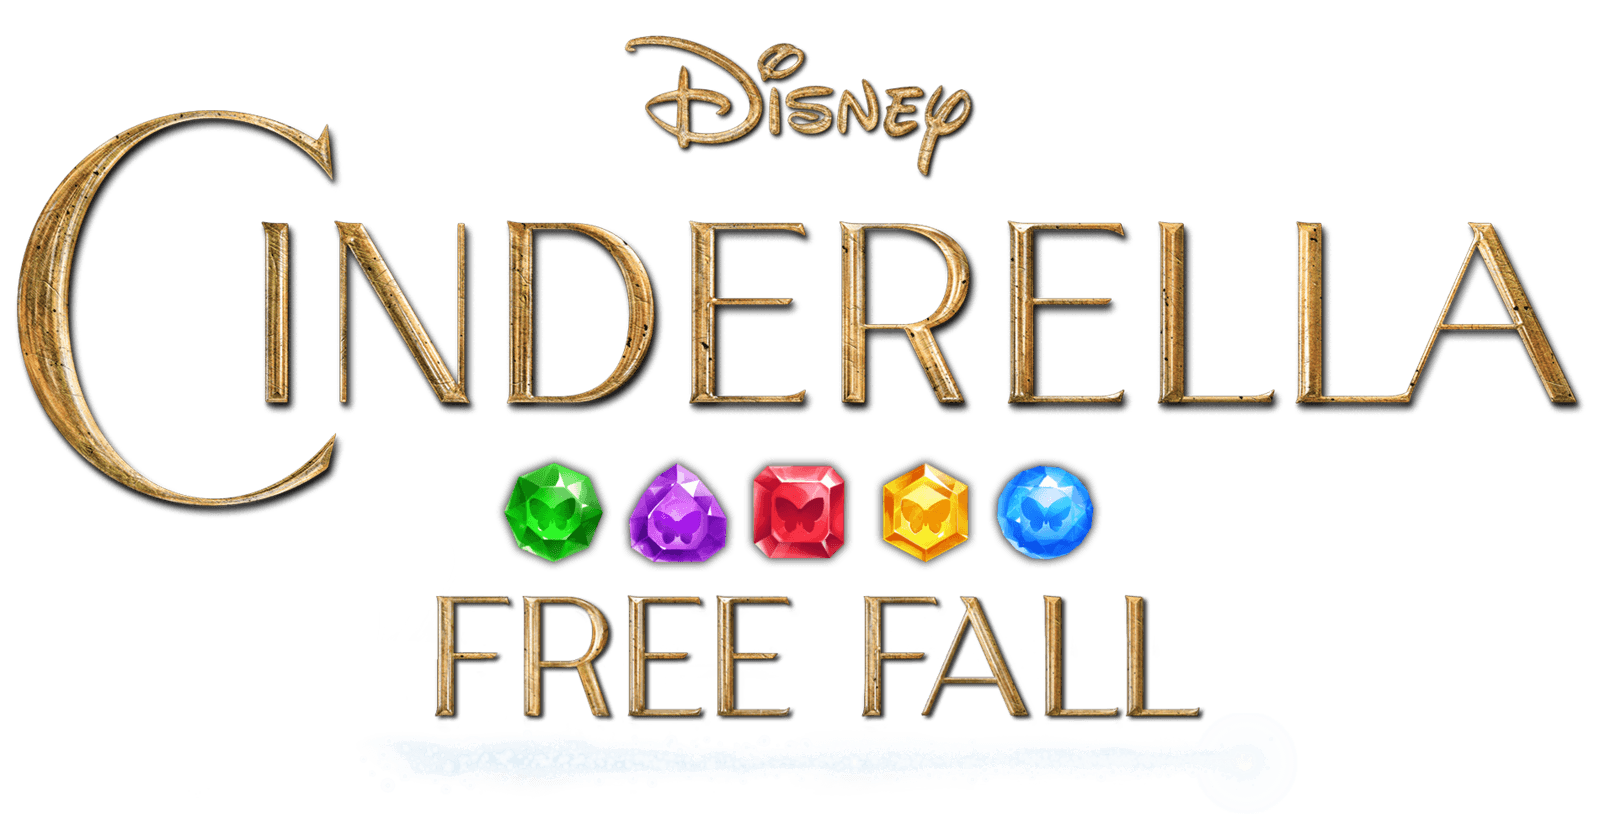 Cinderella Logo - Cinderella logo png 1 » PNG Image